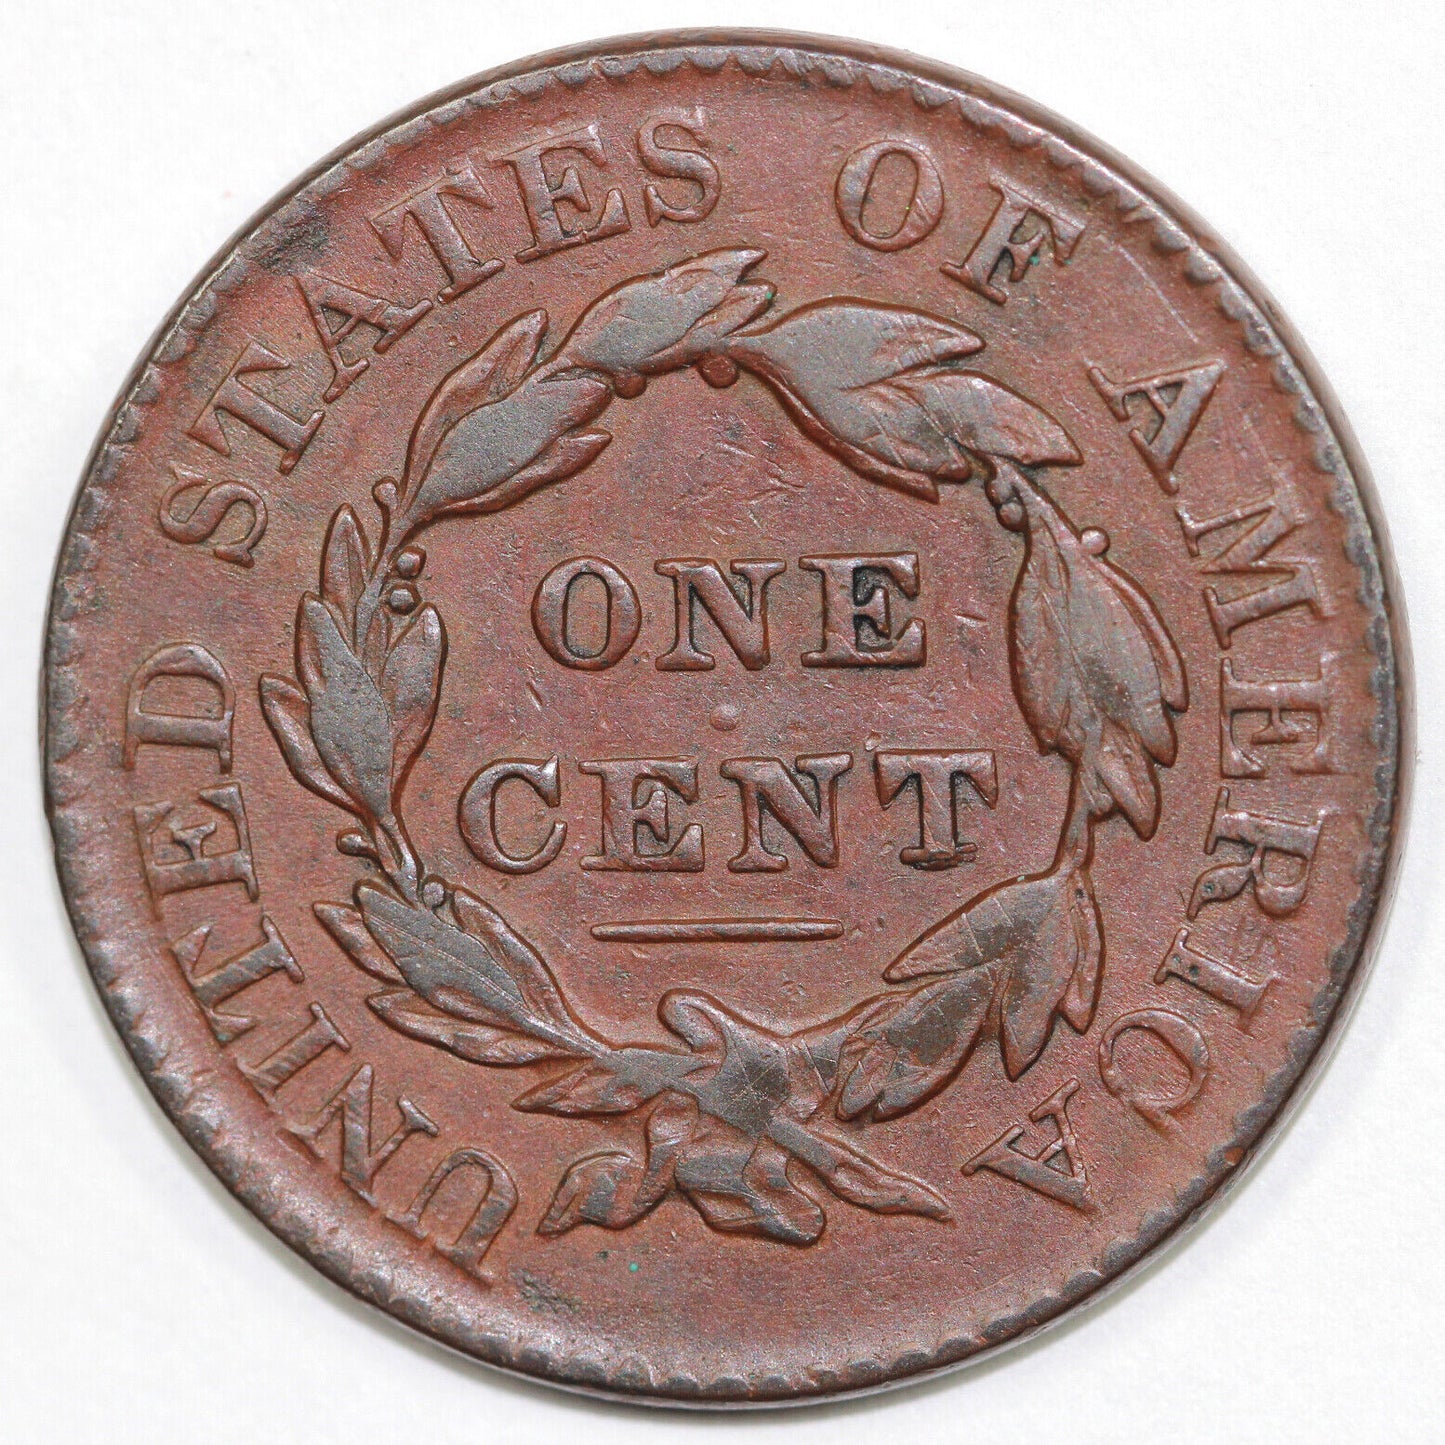 1827 1c Coronet or Matron Head Large Cent